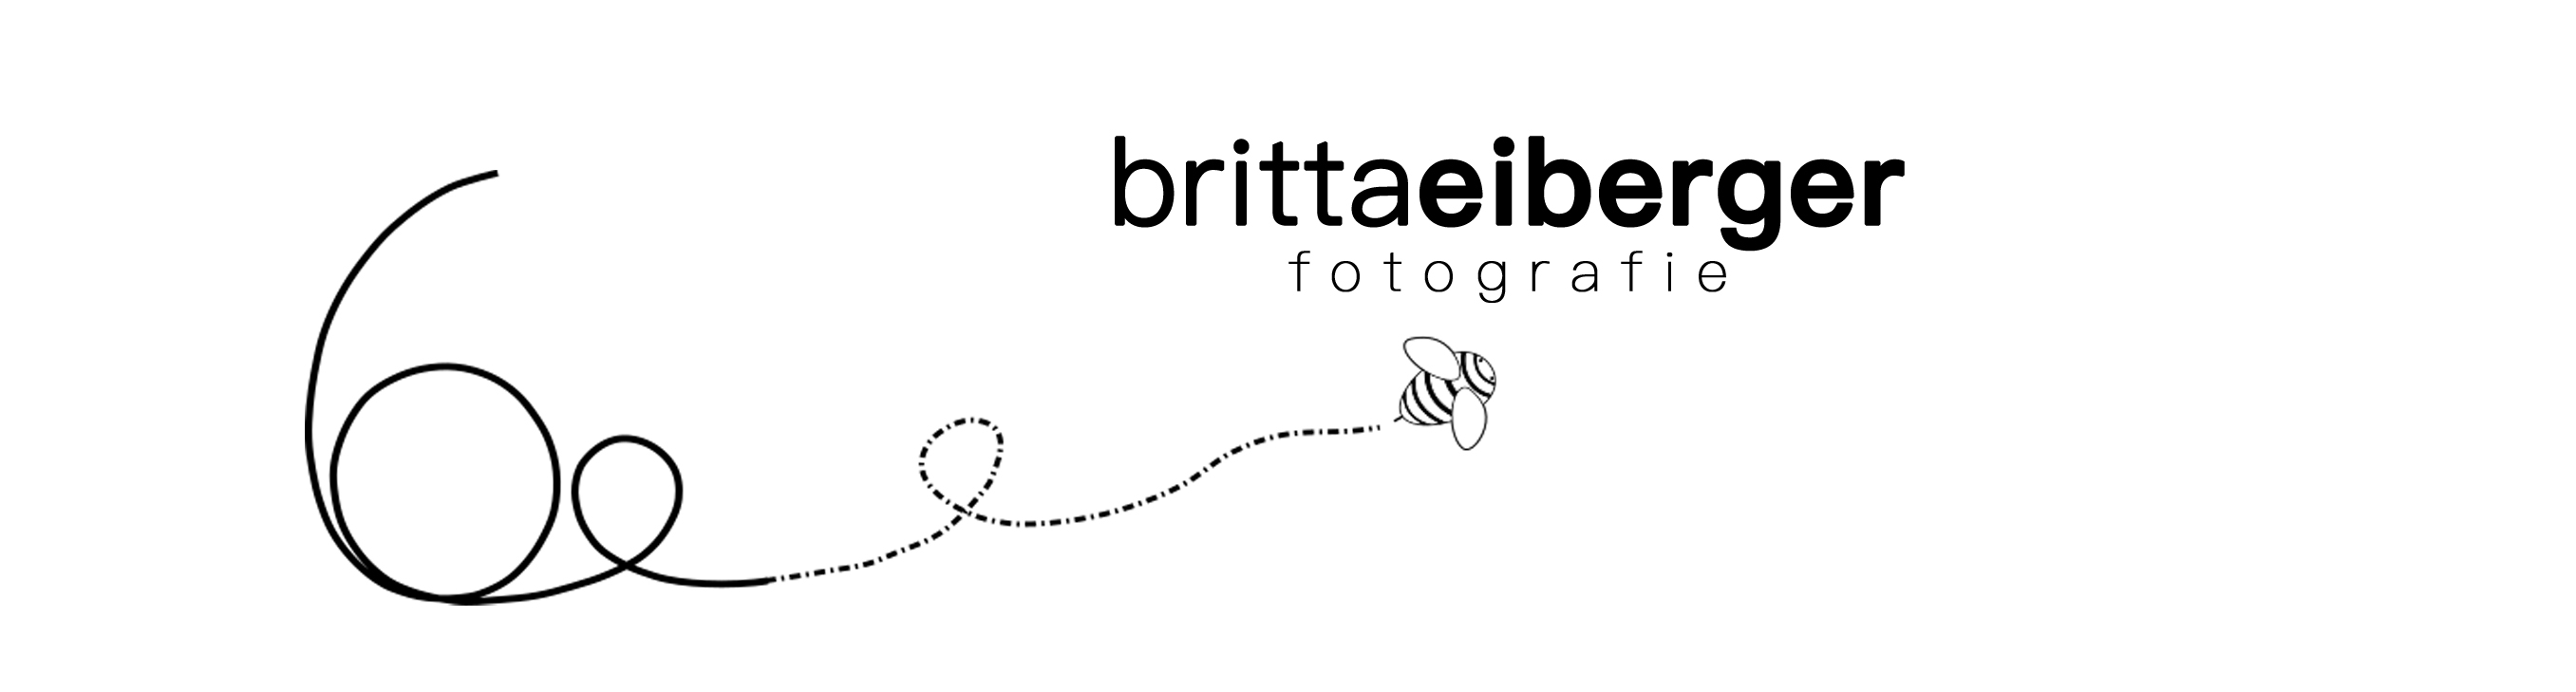 Britta Eiberger Fotografie in Bonn